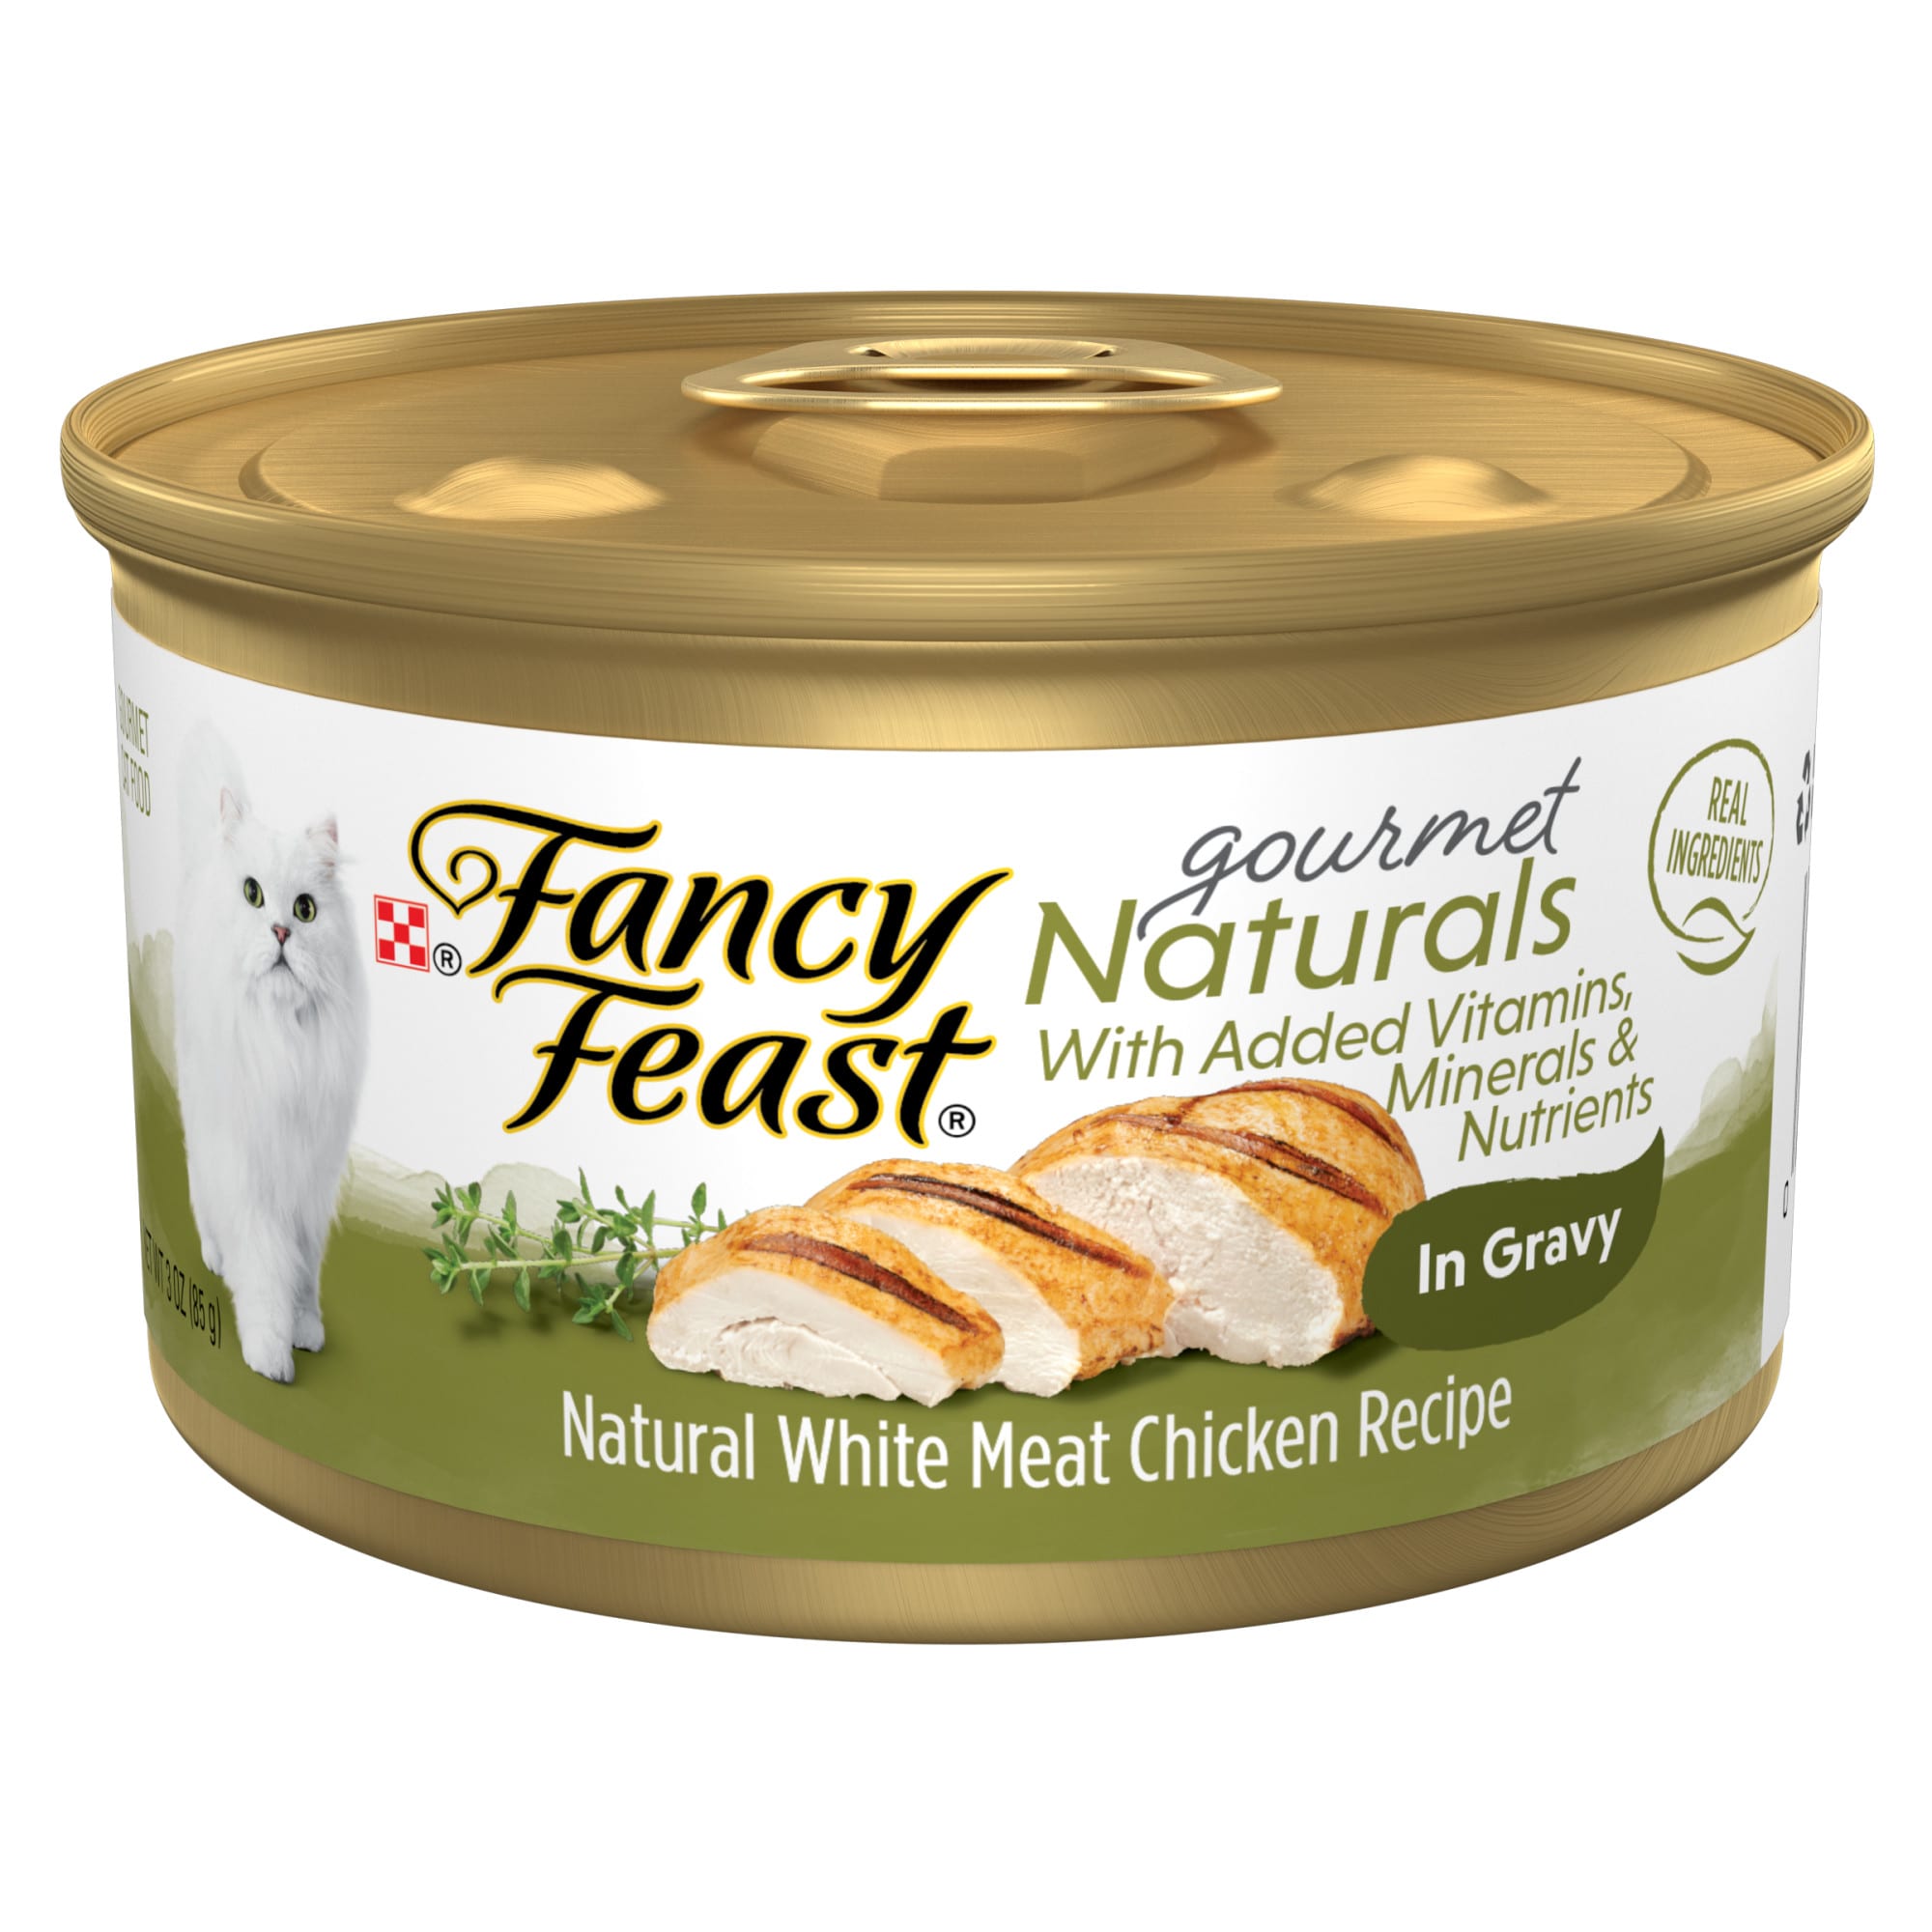 Fancy Feast Gourmet Naturals White Meat Chicken Recipe in Gravy Wet Cat